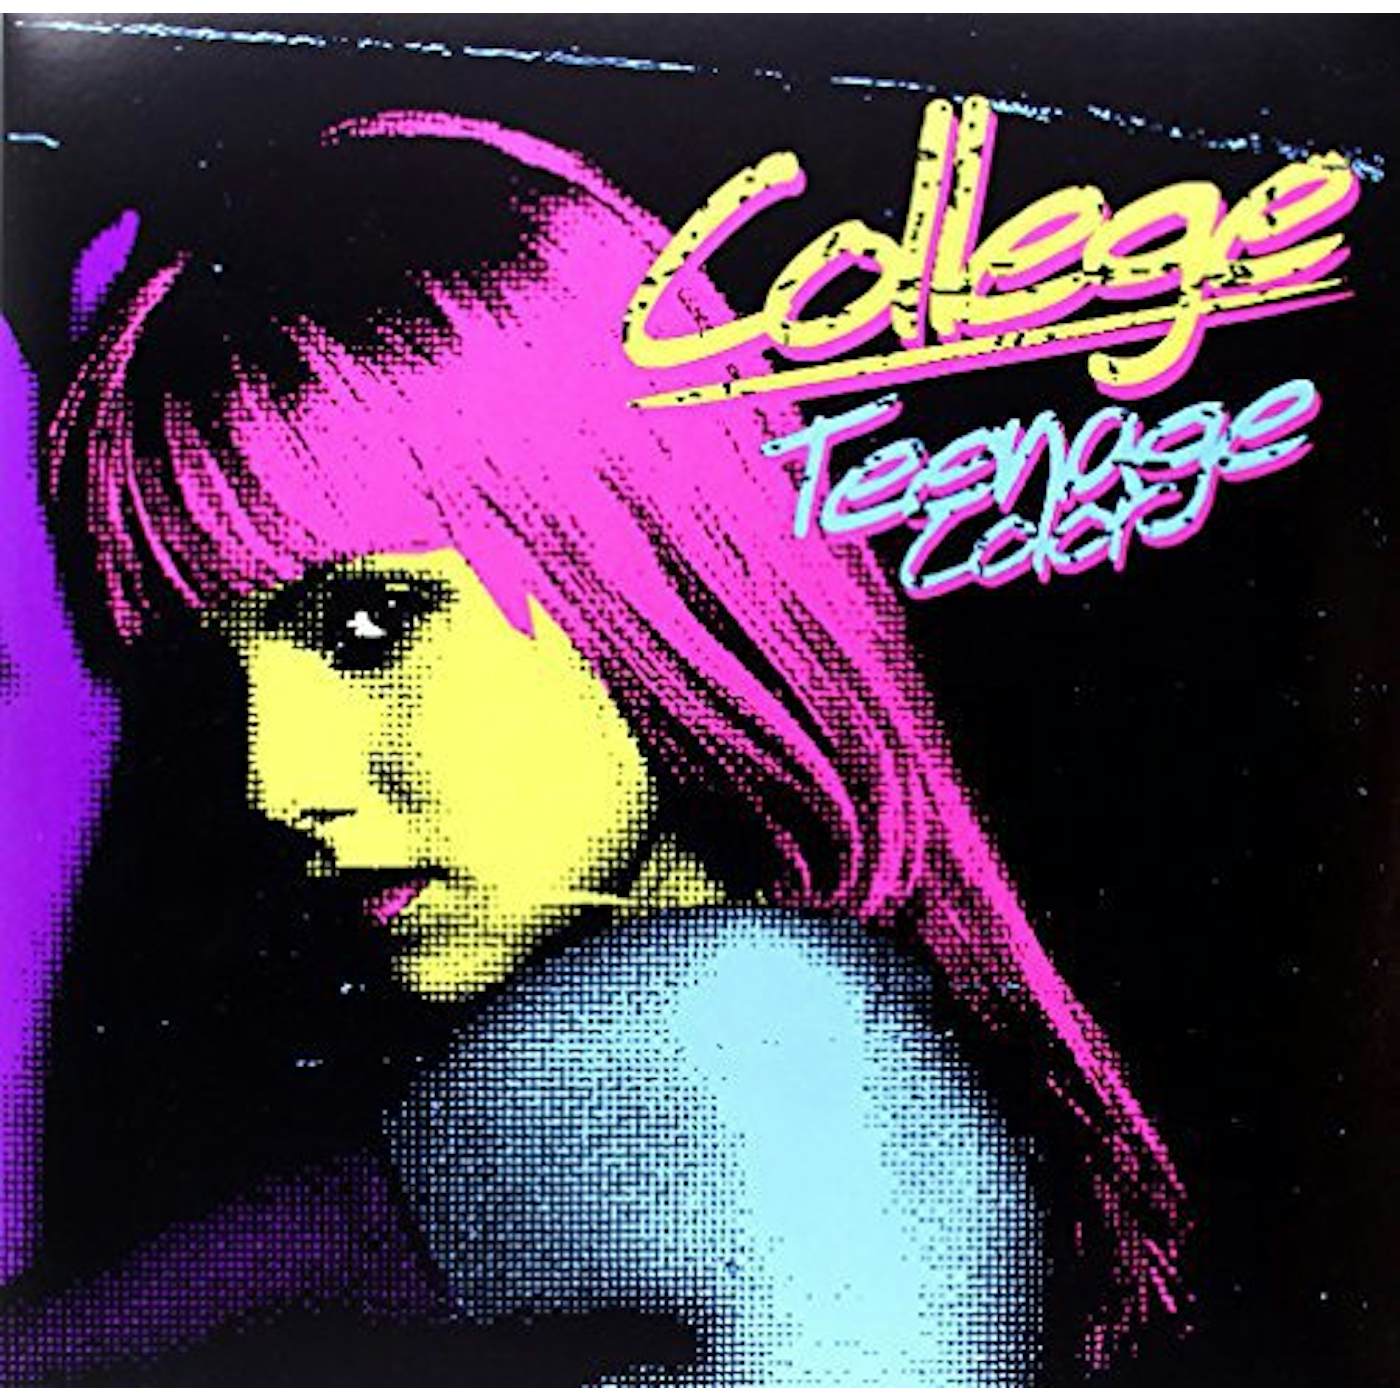 College TEENAGE COLOUR Vinyl Record